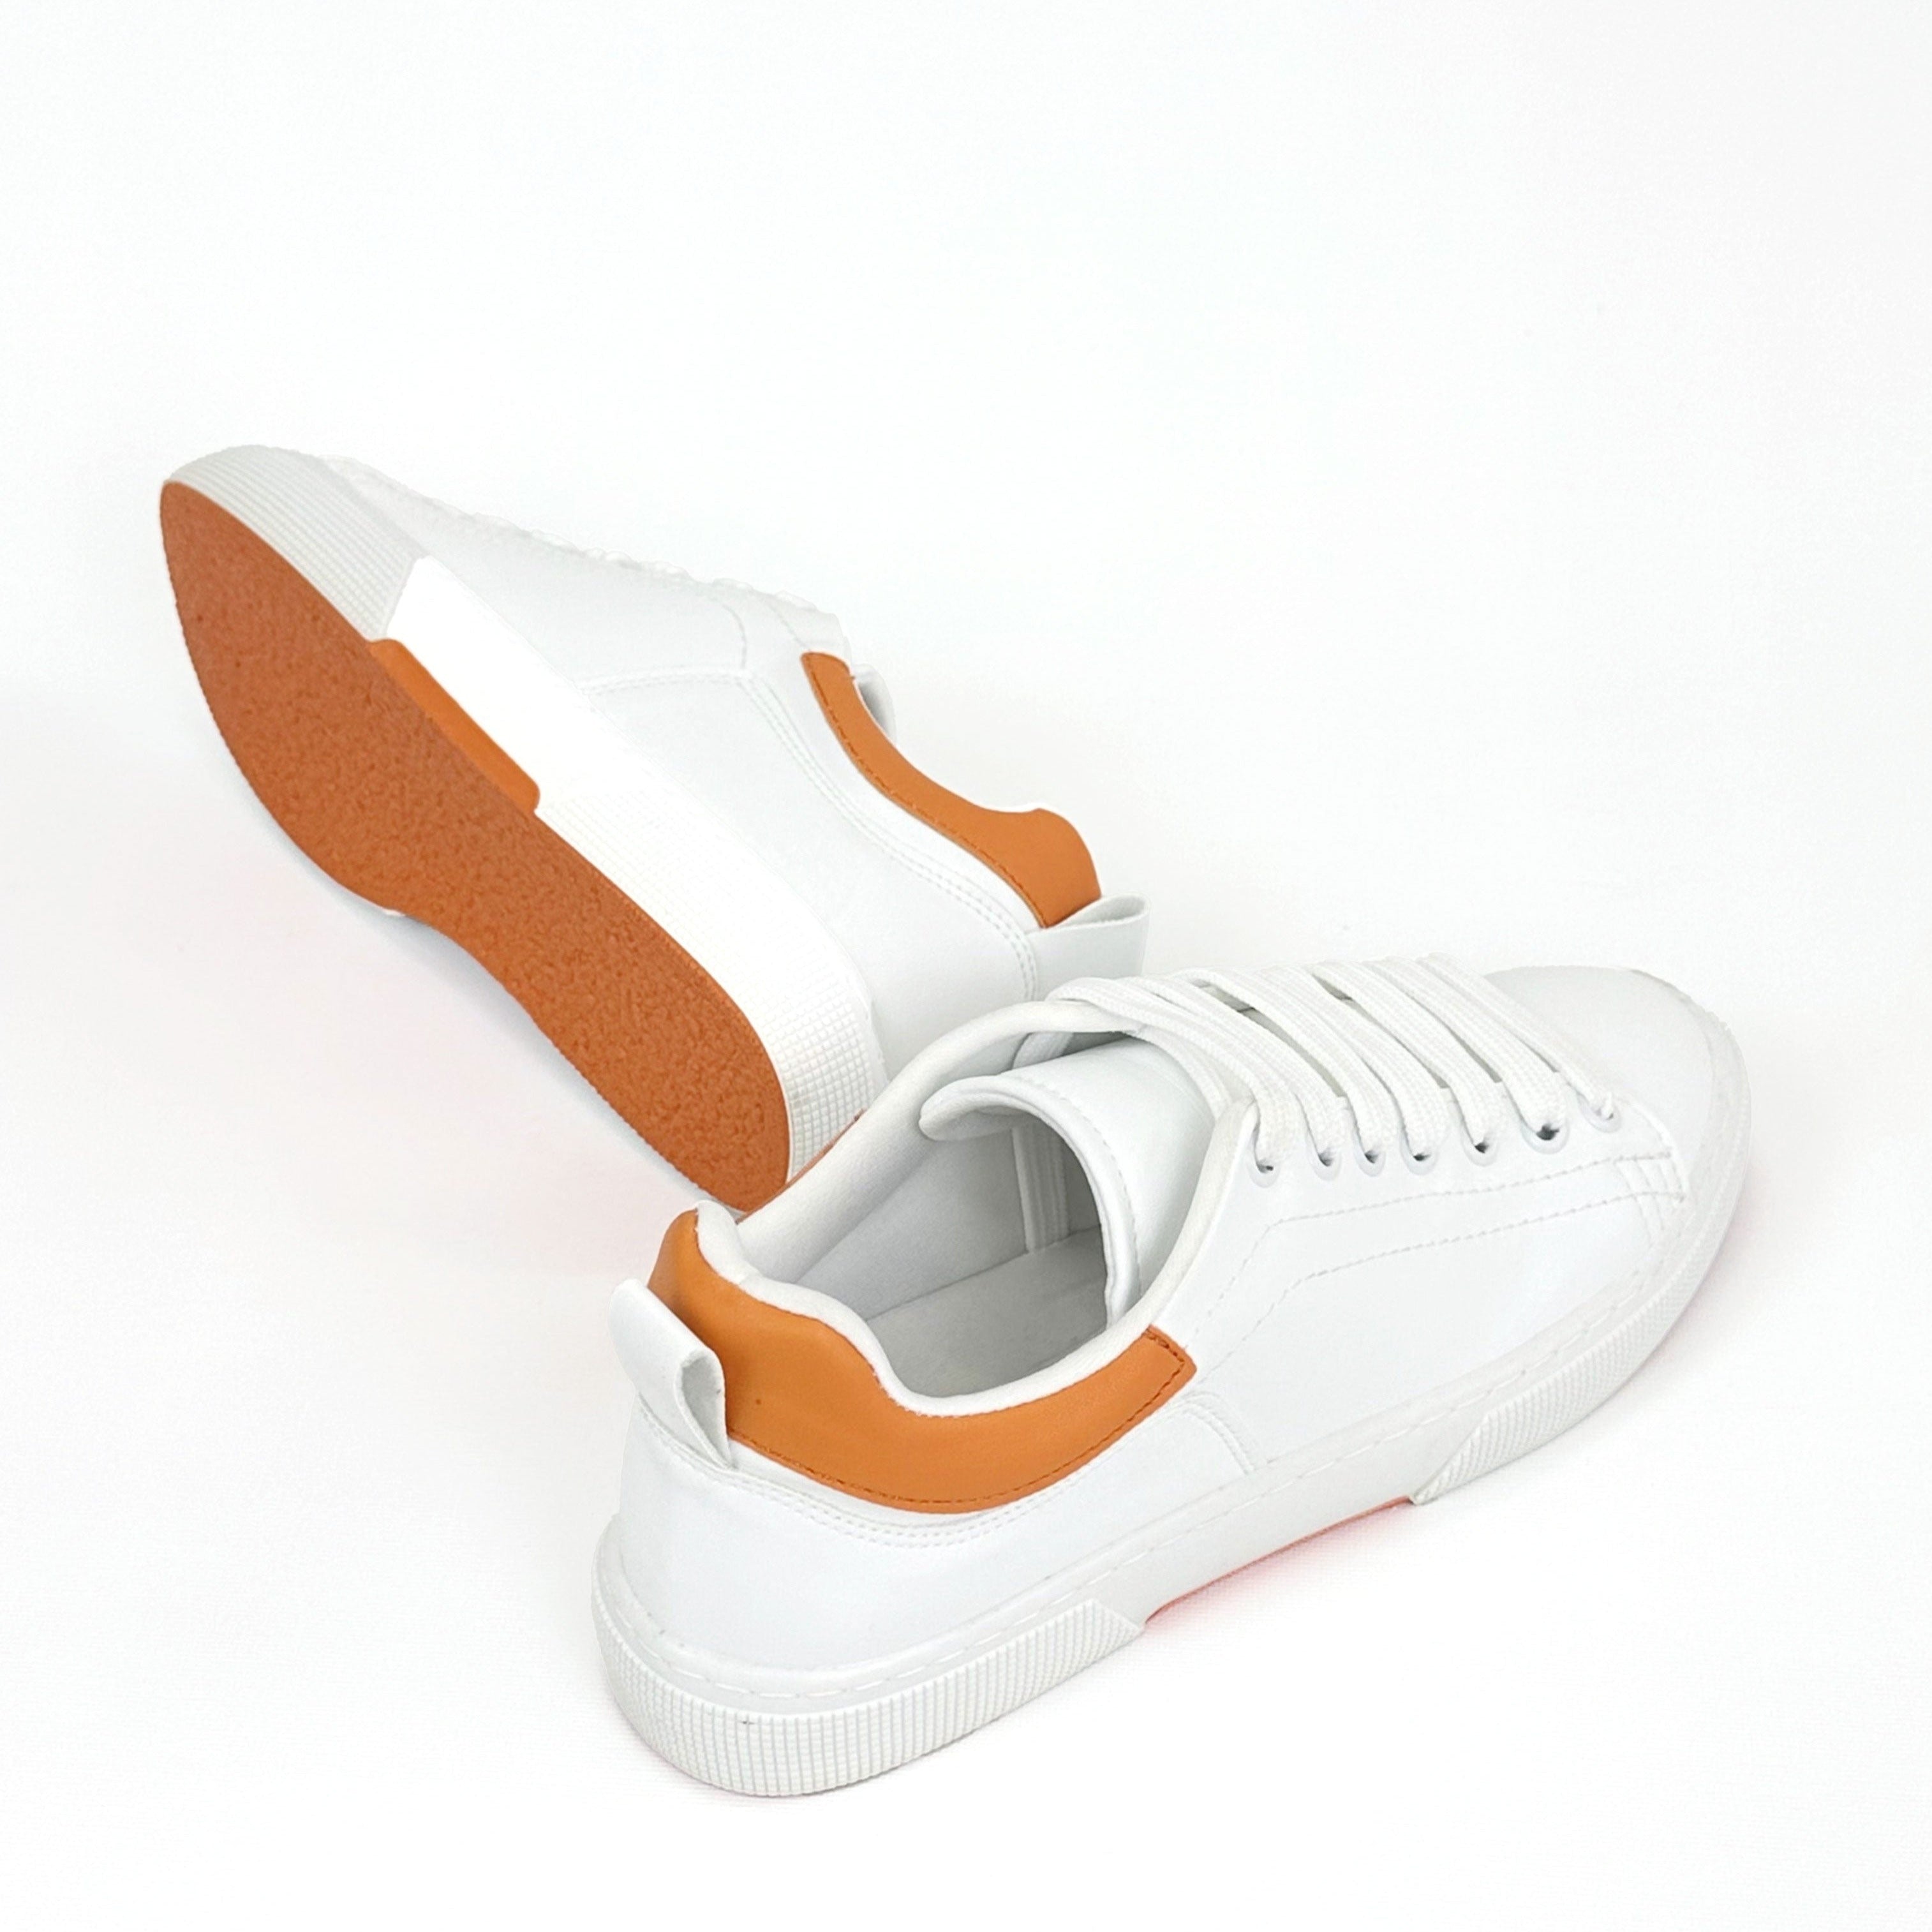 Buy Gola Performance Men's Ceptor TX sneakers in orange online at gola